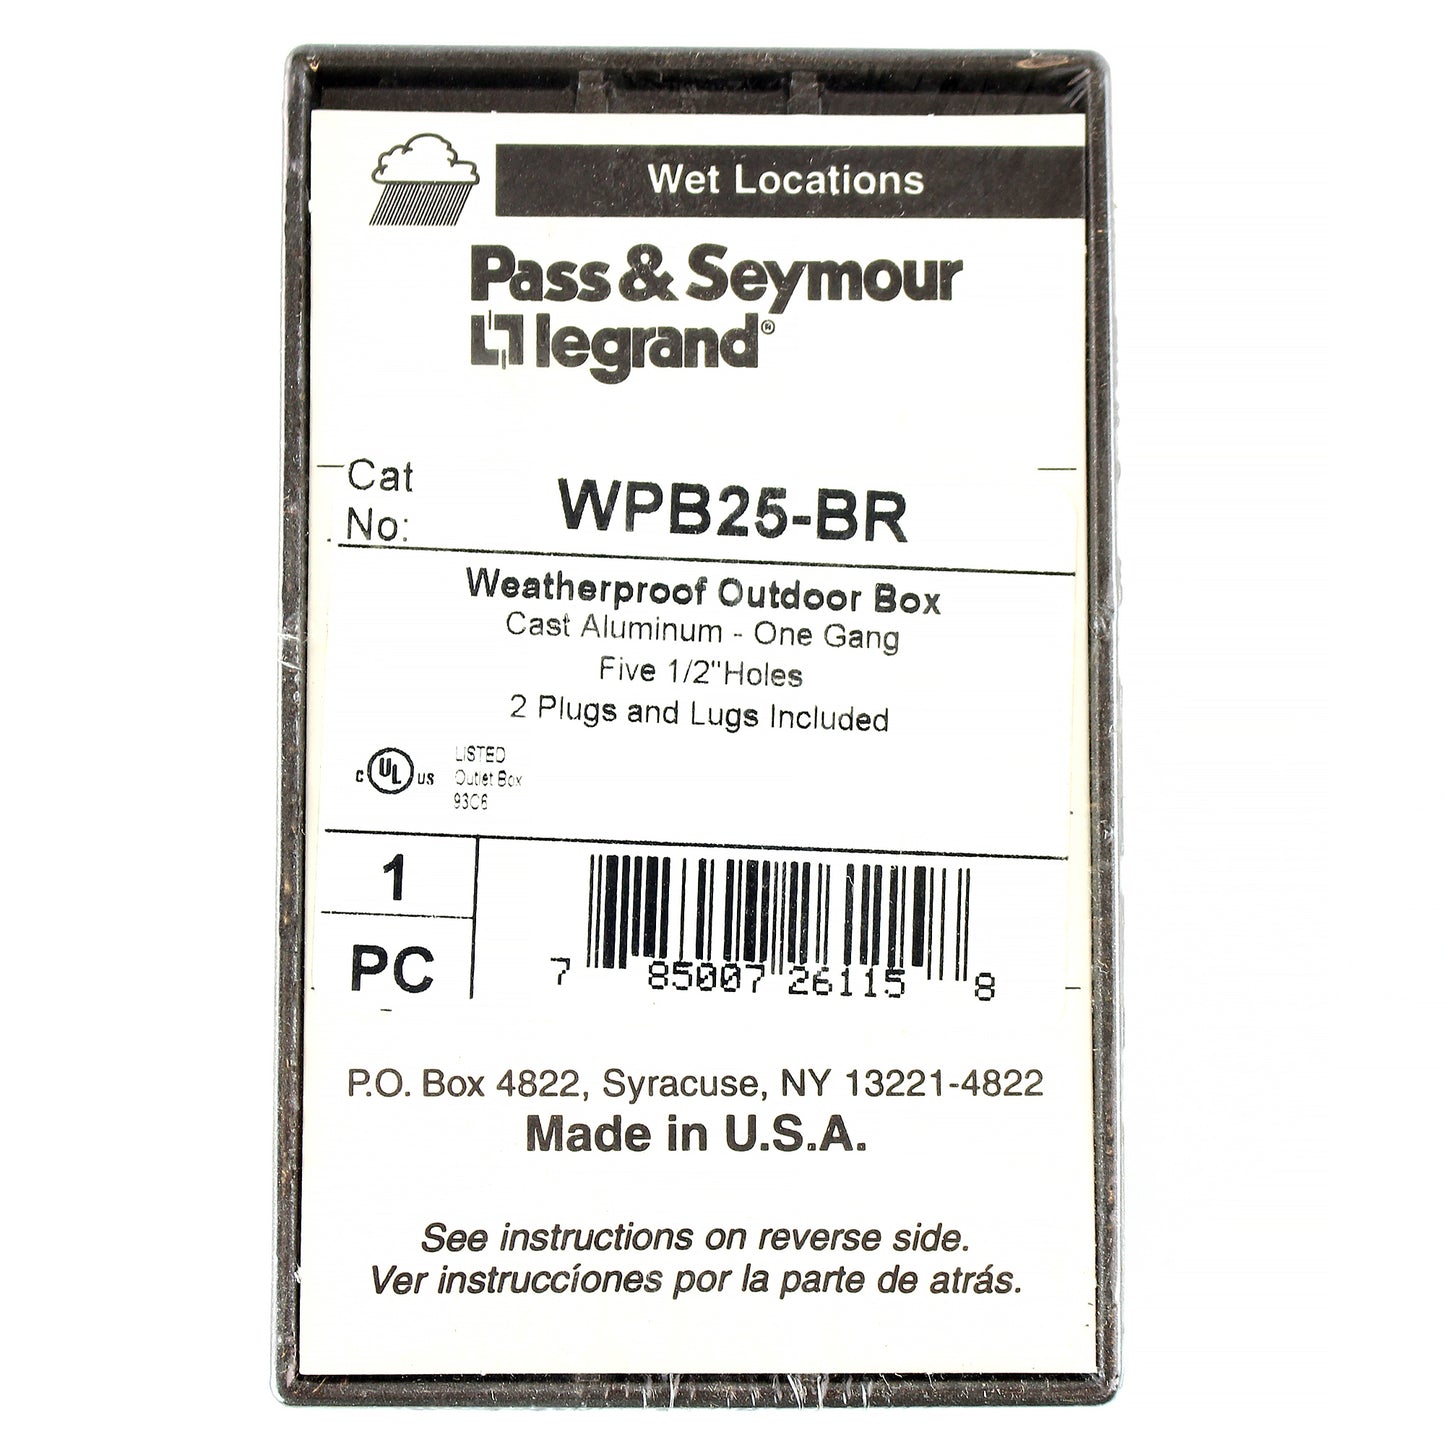 Pass & Seymour Legrand WPB25-BR